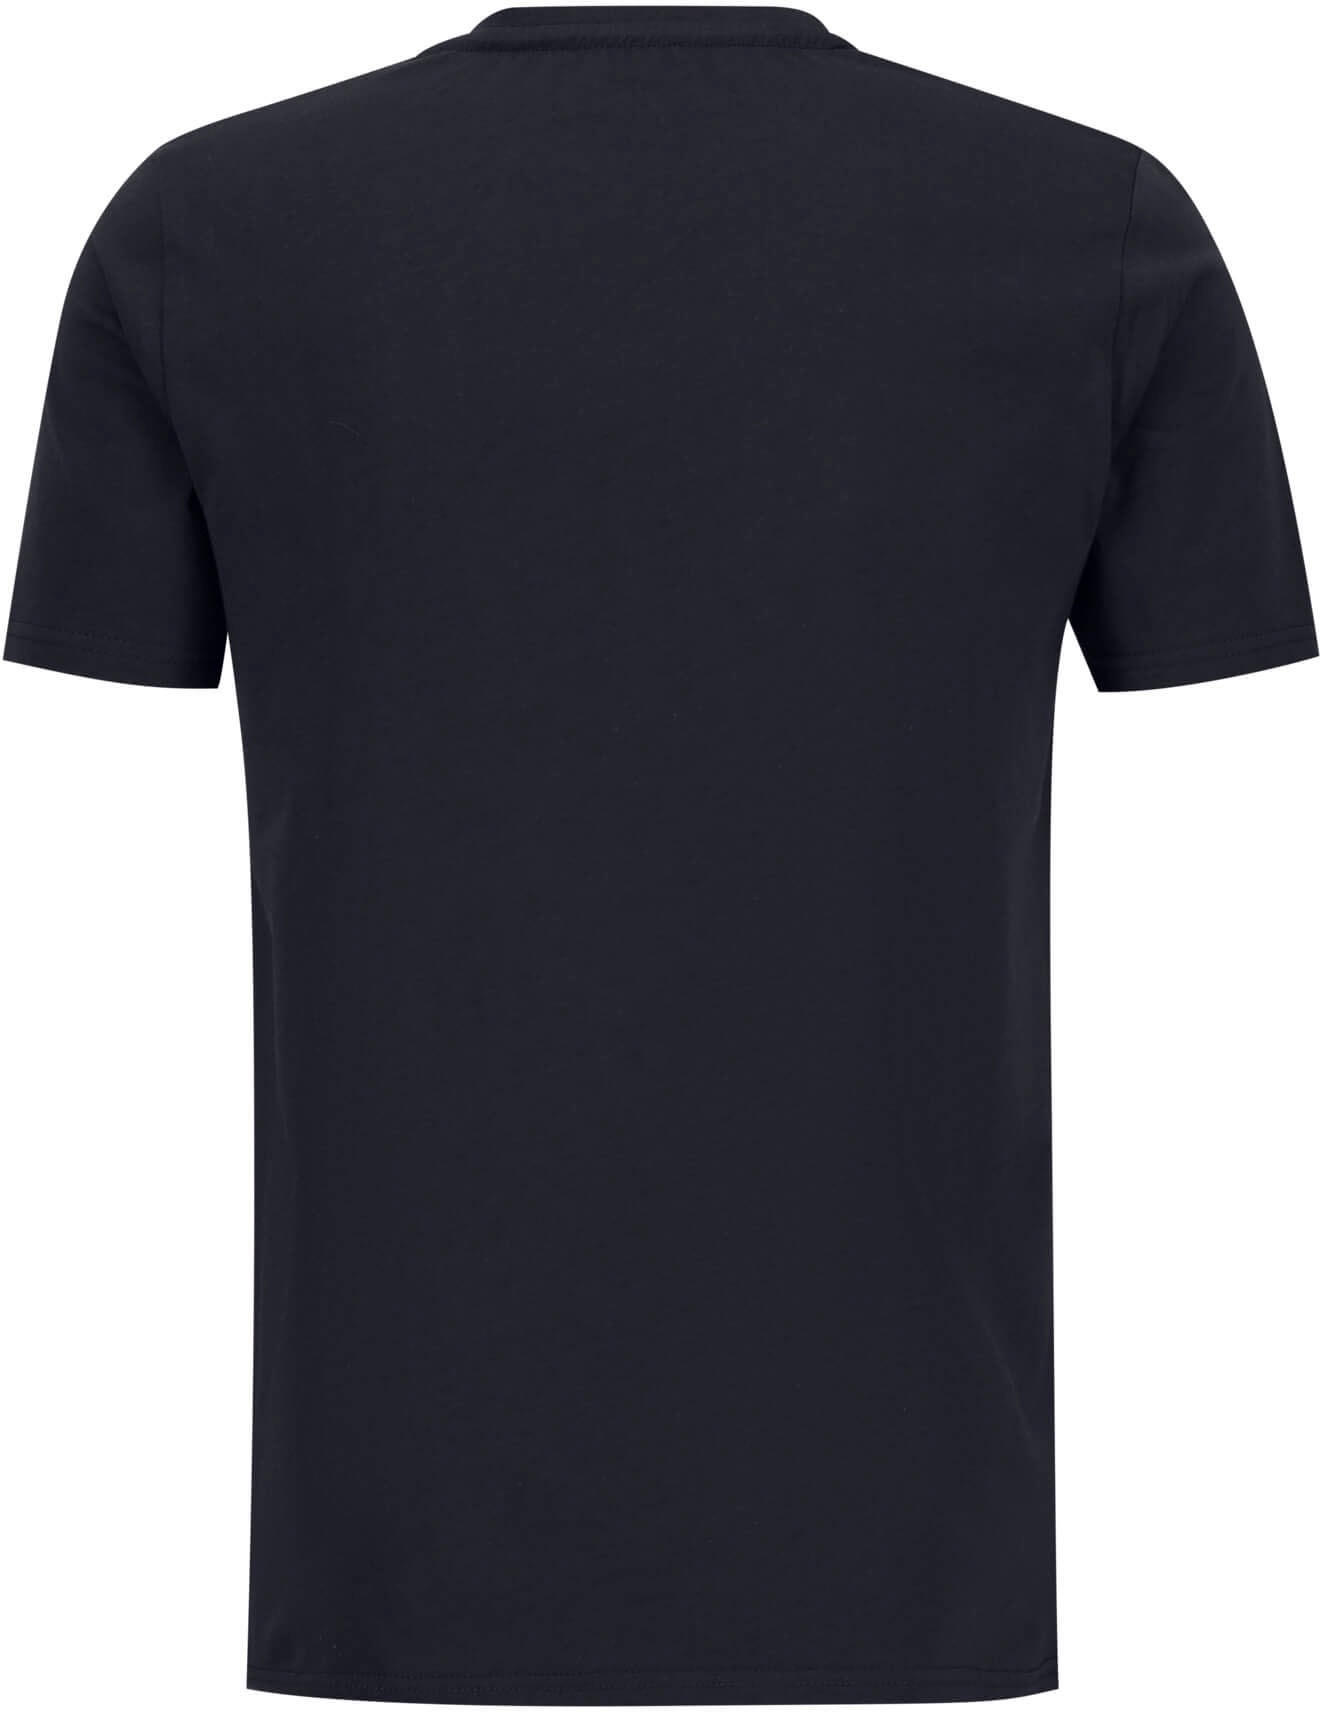 FYNCH-HATTON Kurzarmshirt »T-Shirt«, (1 tlg.) ▷ kaufen | BAUR